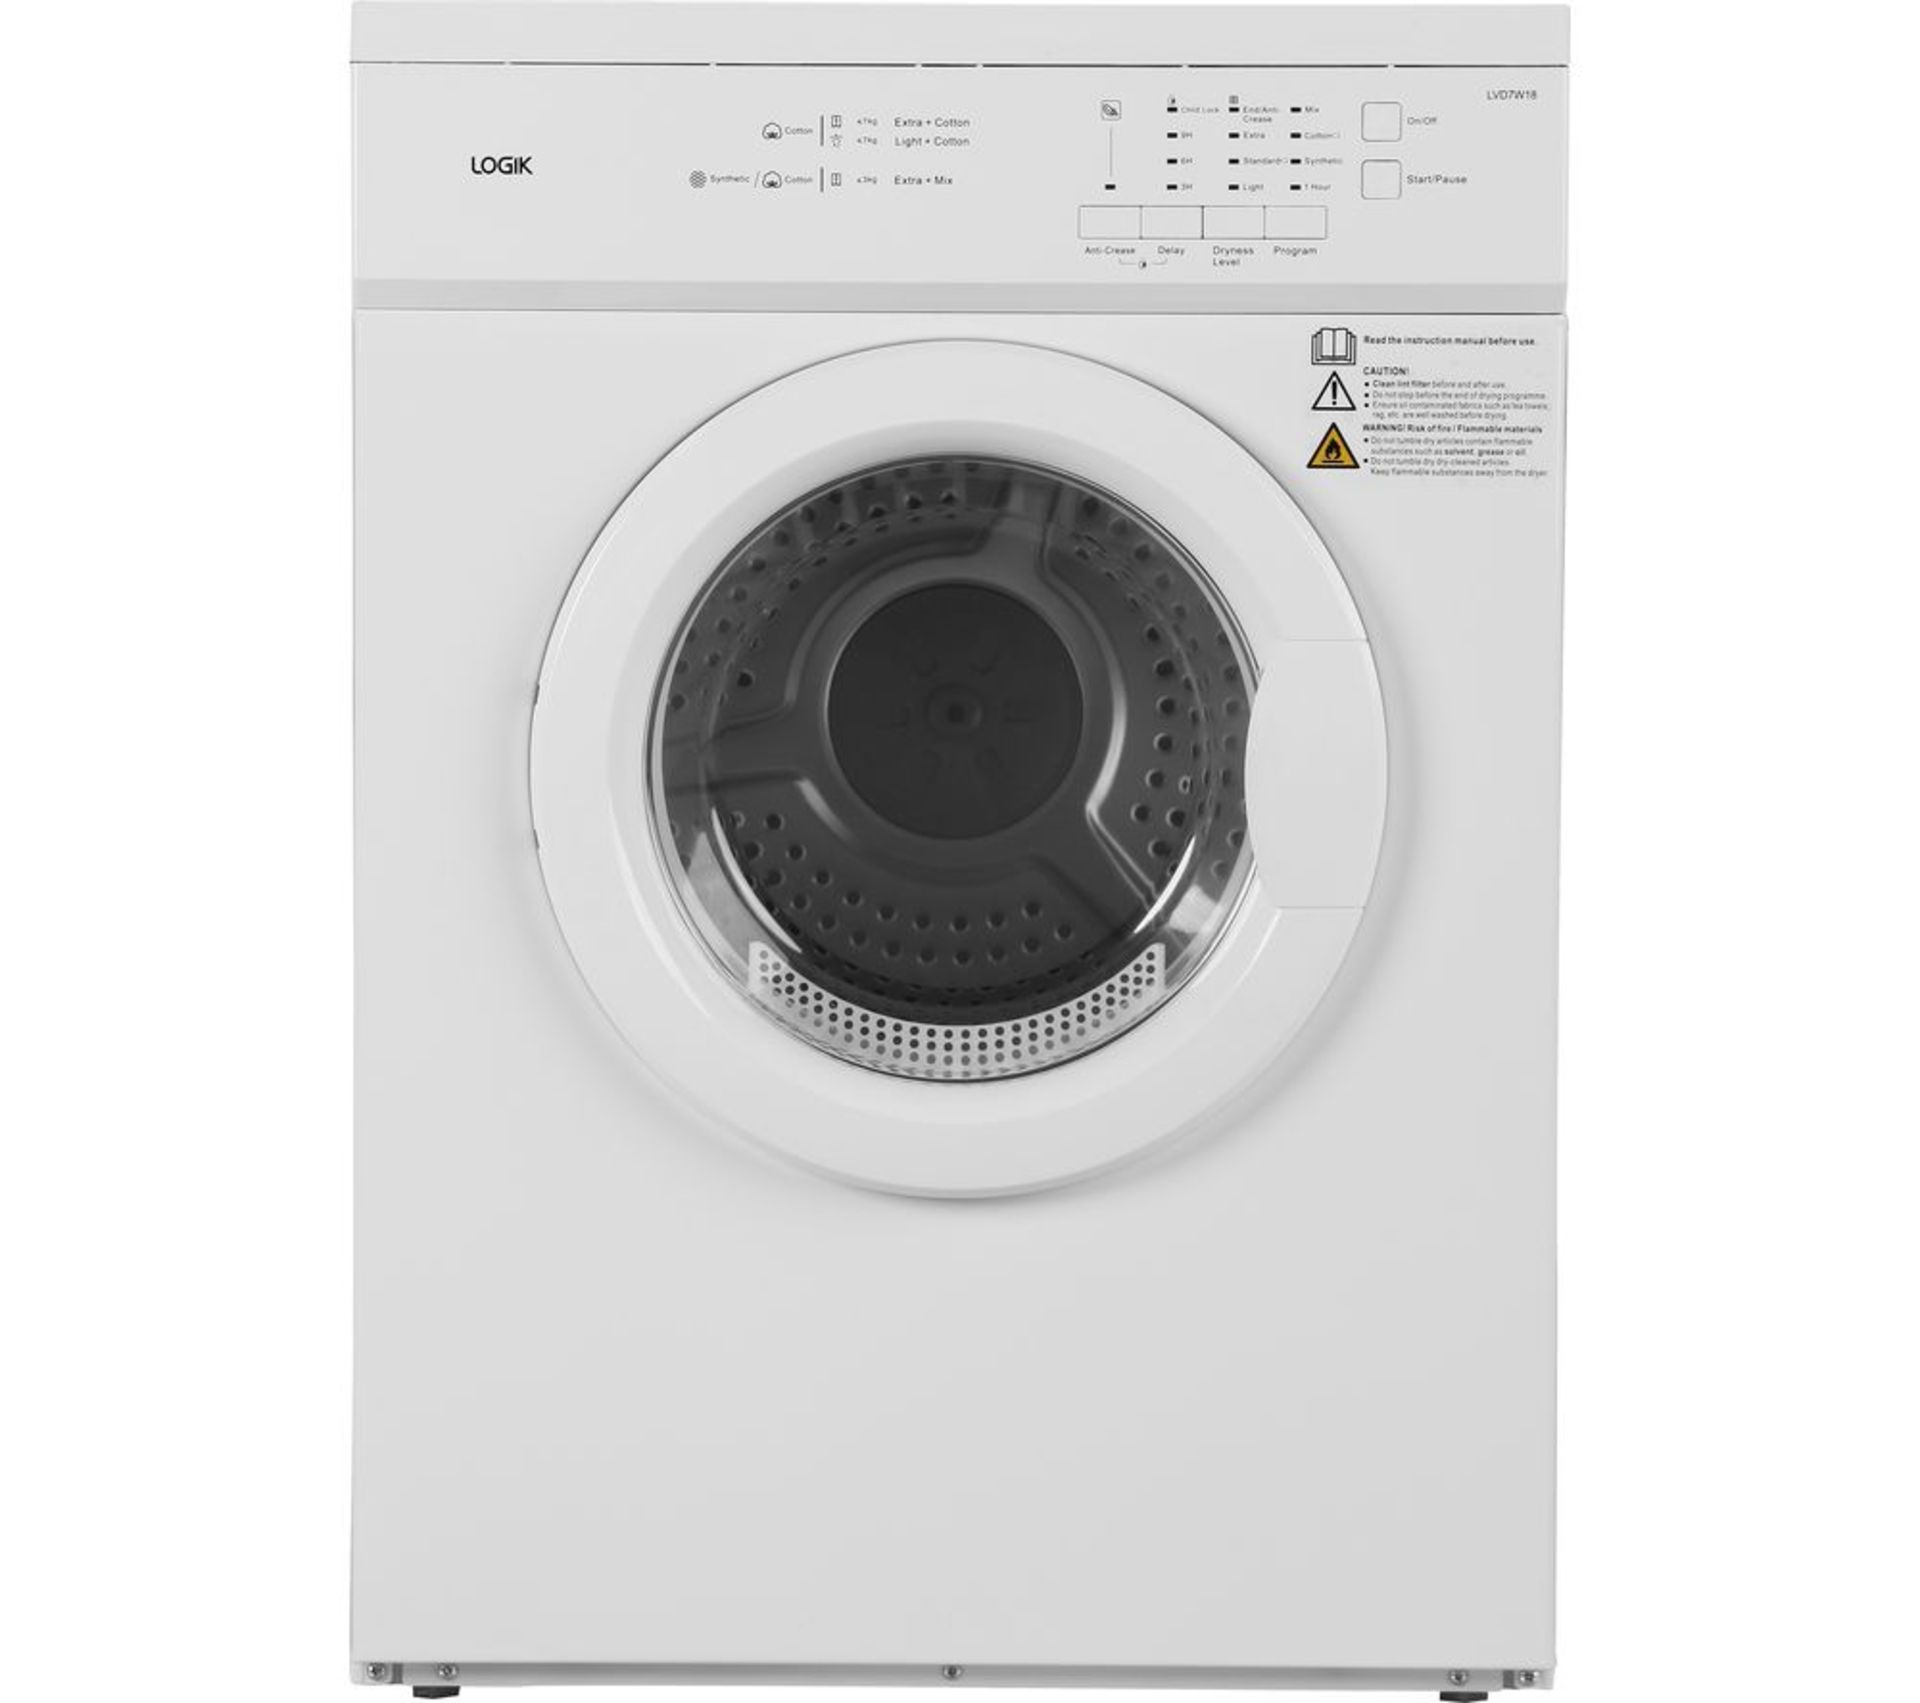 Pallet of Mixed LOGIK Laundry White Goods. Latest selling price £739.96* - Image 3 of 7